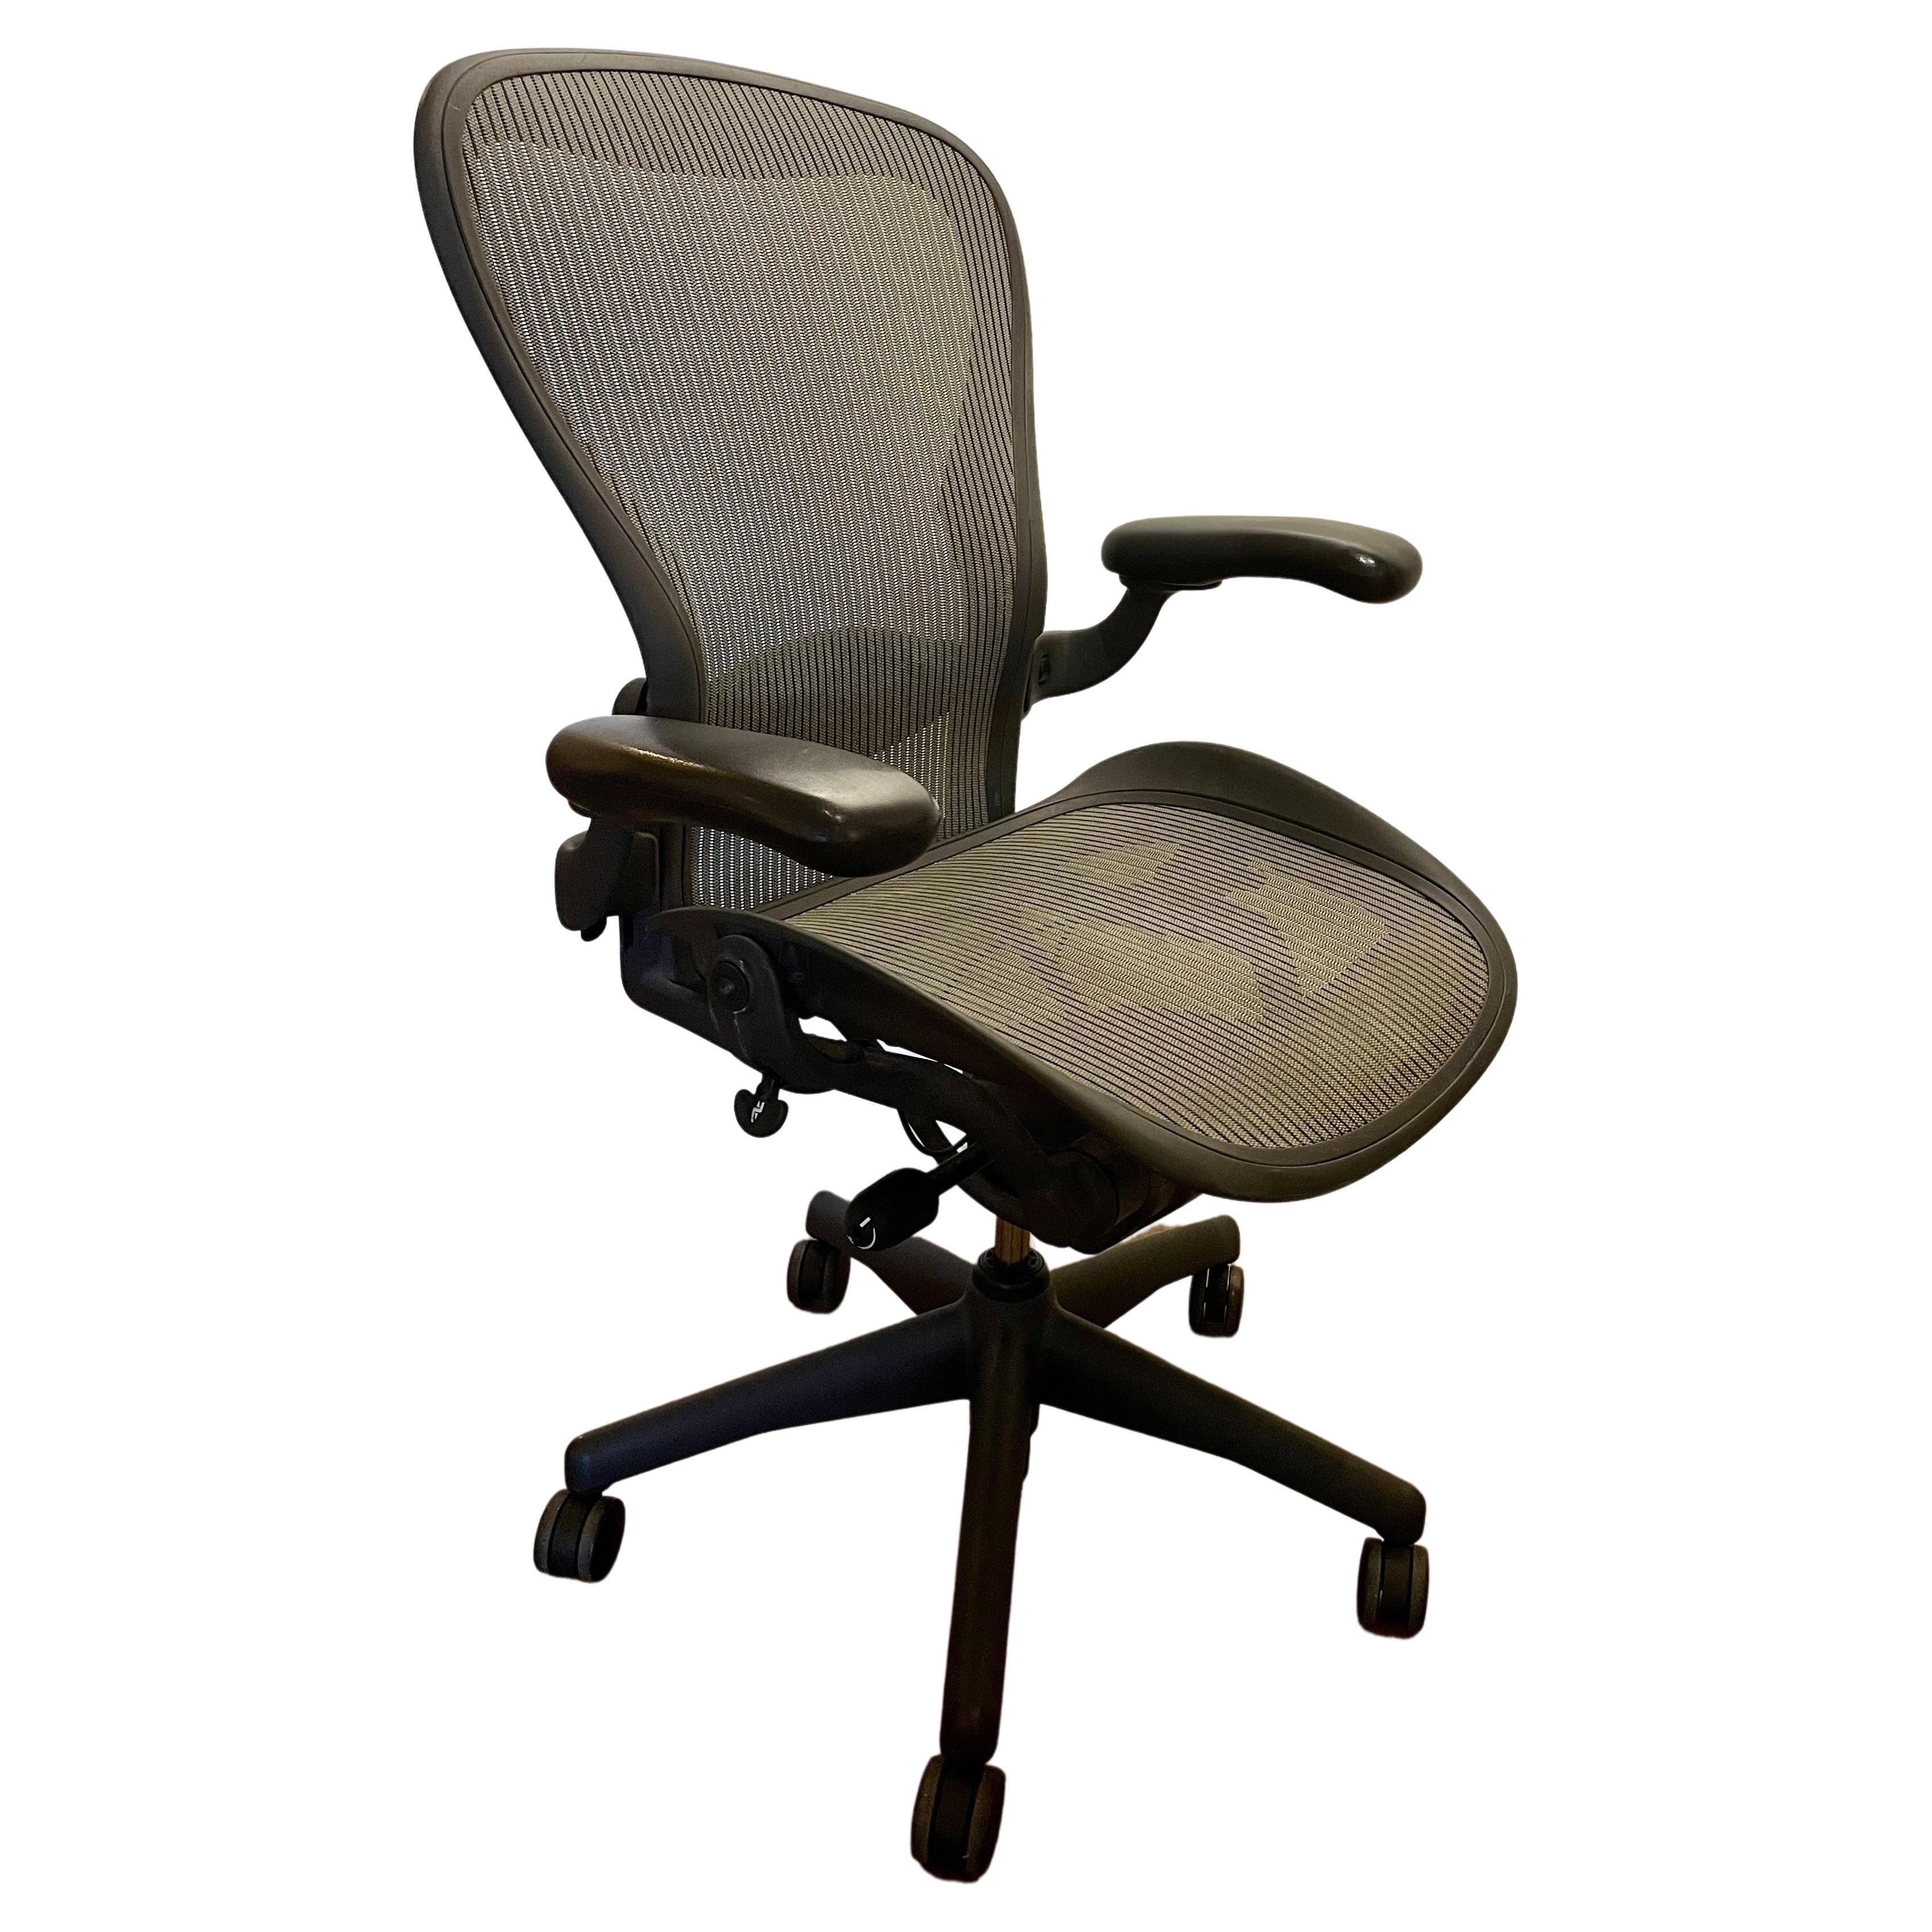 Herman Miller Aeron Desk Chair Adjustable Arms & Lumbar Support